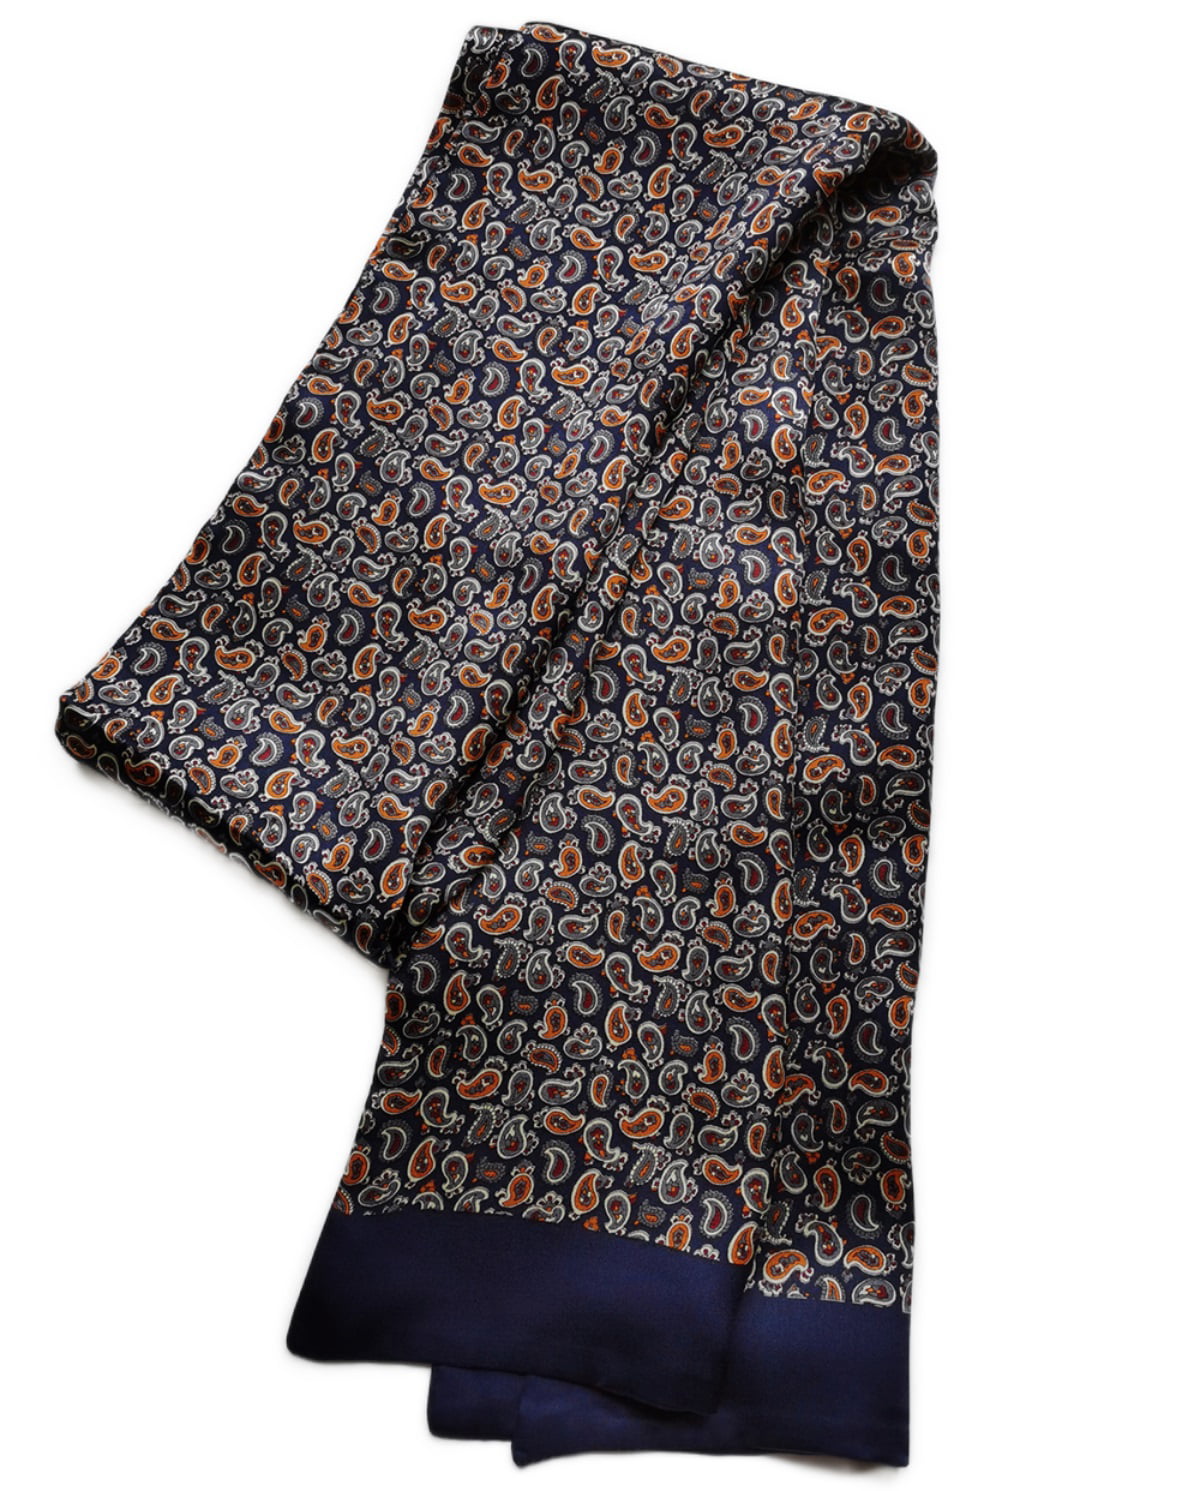 XUYUZUAU 100 Silk Scarves for Men Fashion Neck Scarf Double Layer